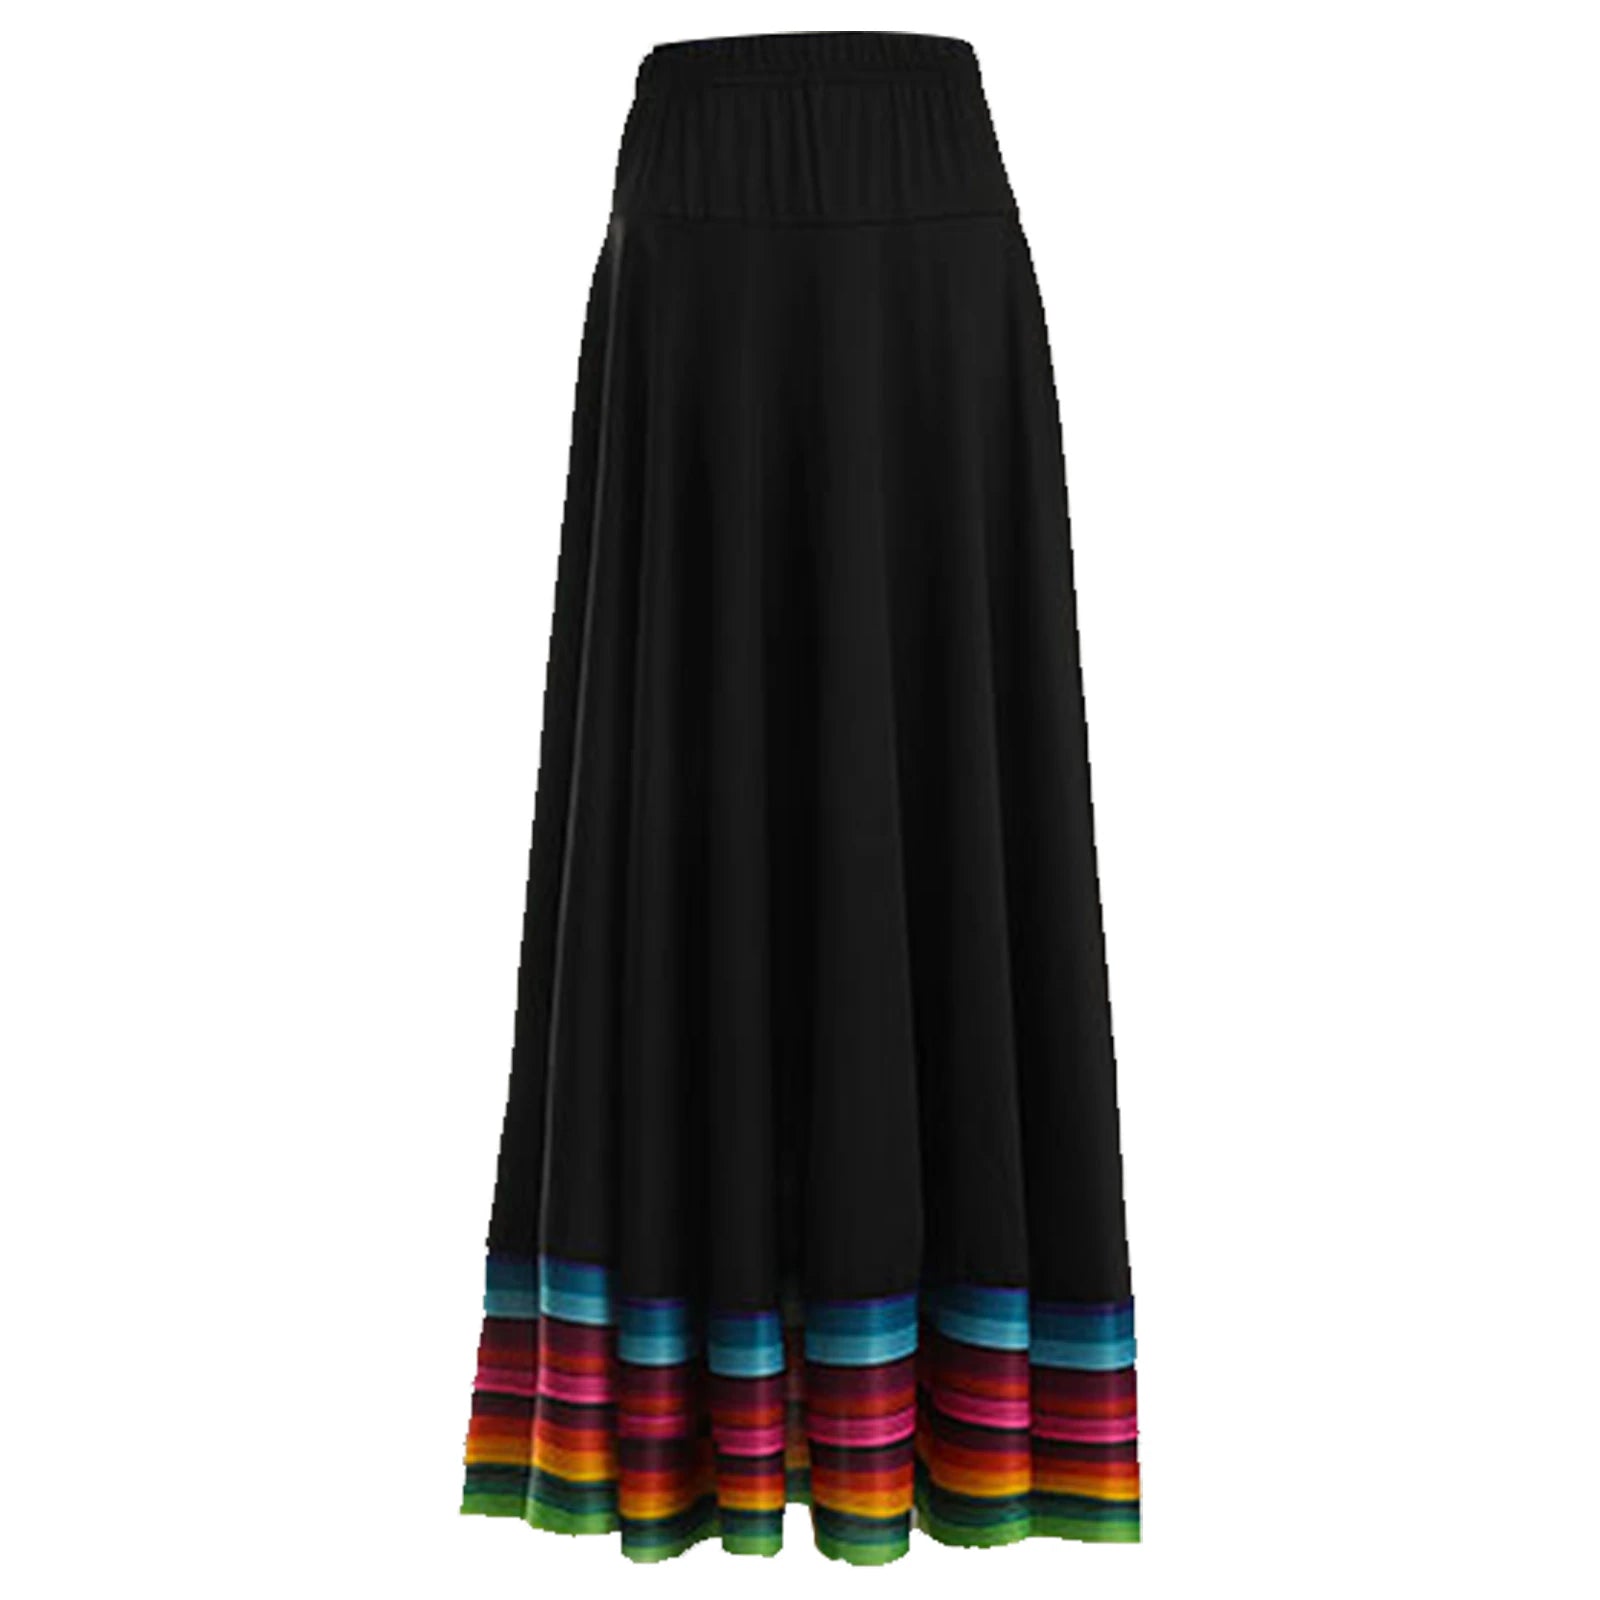 Flamenco/Gipsy Skirt - Dancewear by Patricia